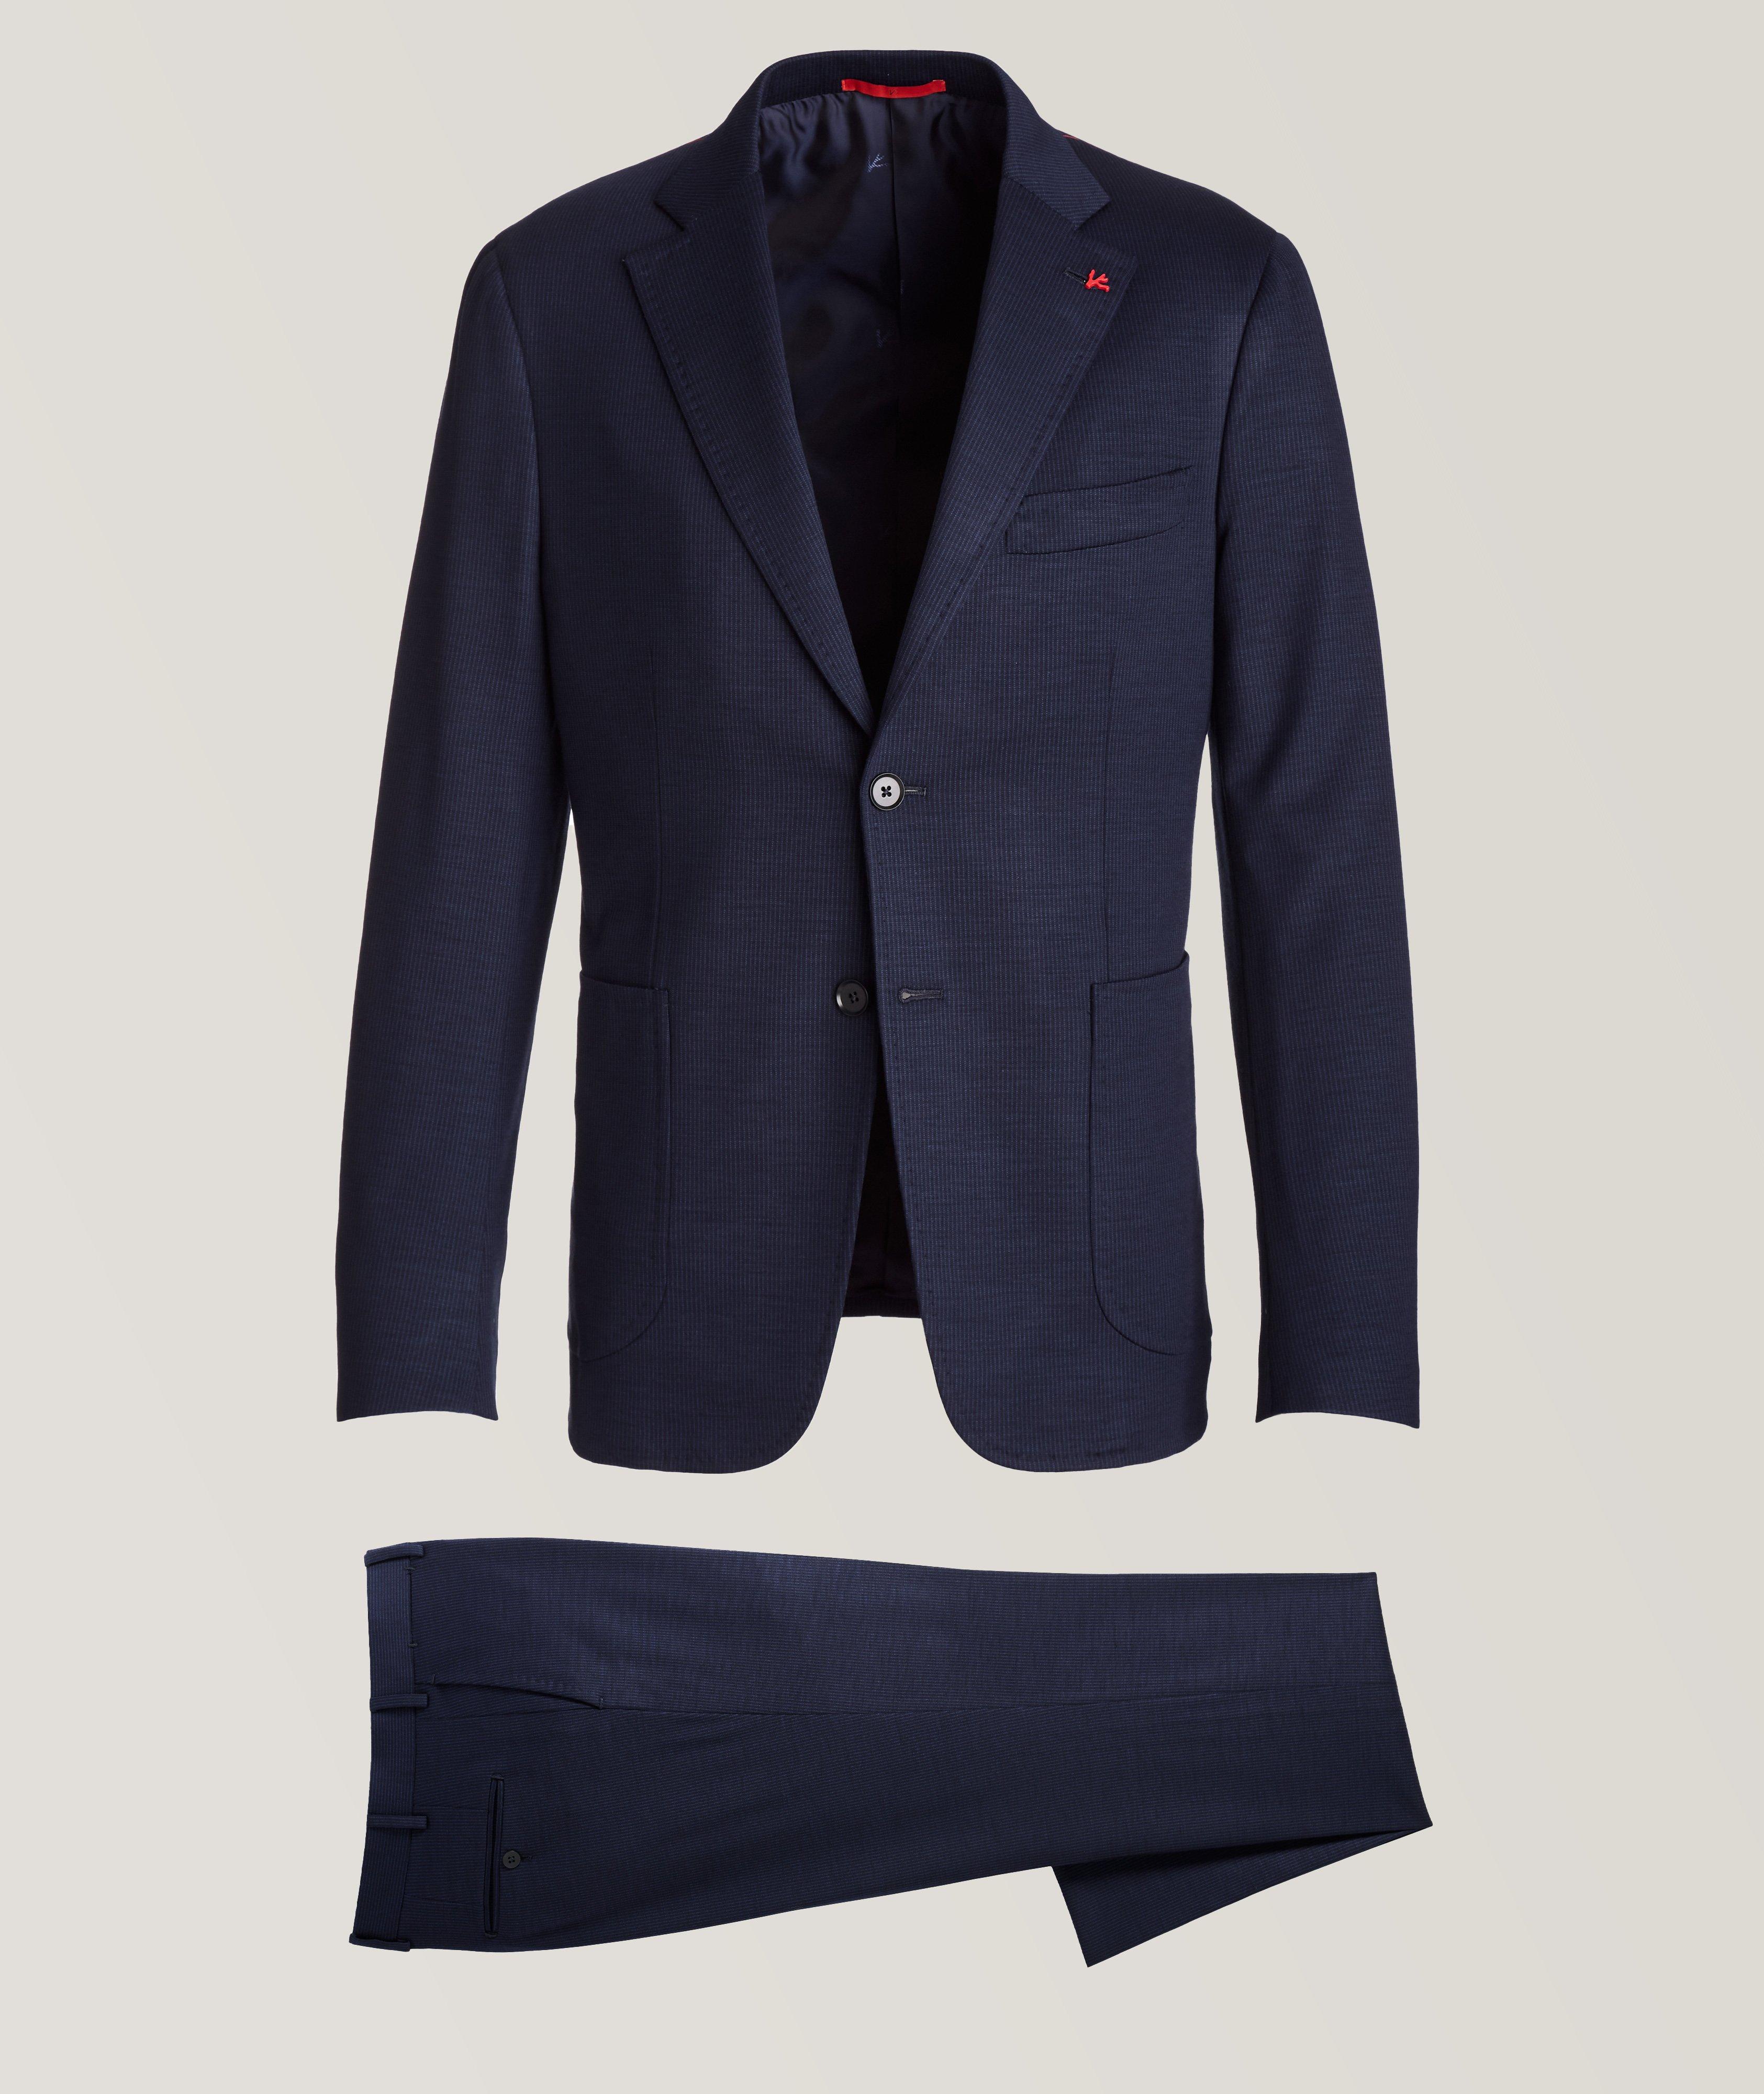 Capri Stretch-Wool Suit image 0